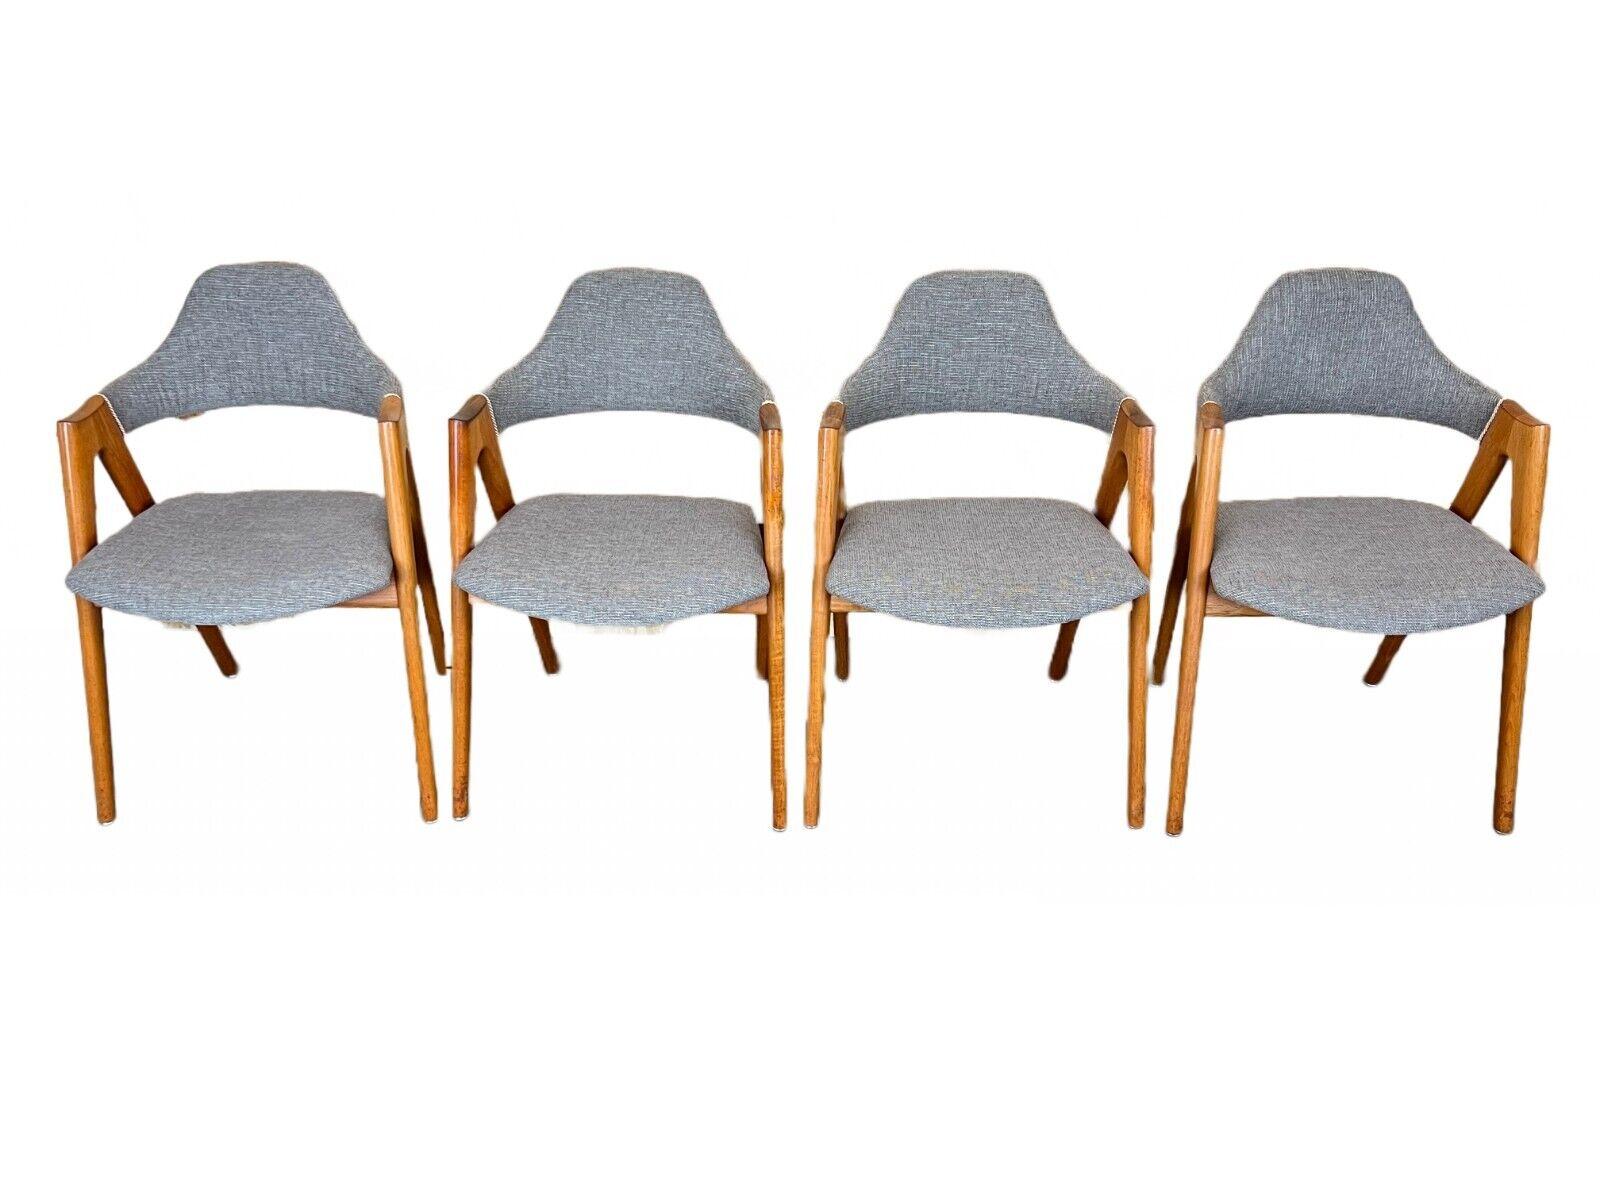 4x 60s 70s Teak chair chairs Kai Kristiansen Sva Møbler Danish Design

Object: 4x chair

Manufacturer: Kai Kristiansen

Condition: good

Age: around 1960-1970

Dimensions:

Width = 51cm
Depth = 51cm
Height = 79cm
Seat height =